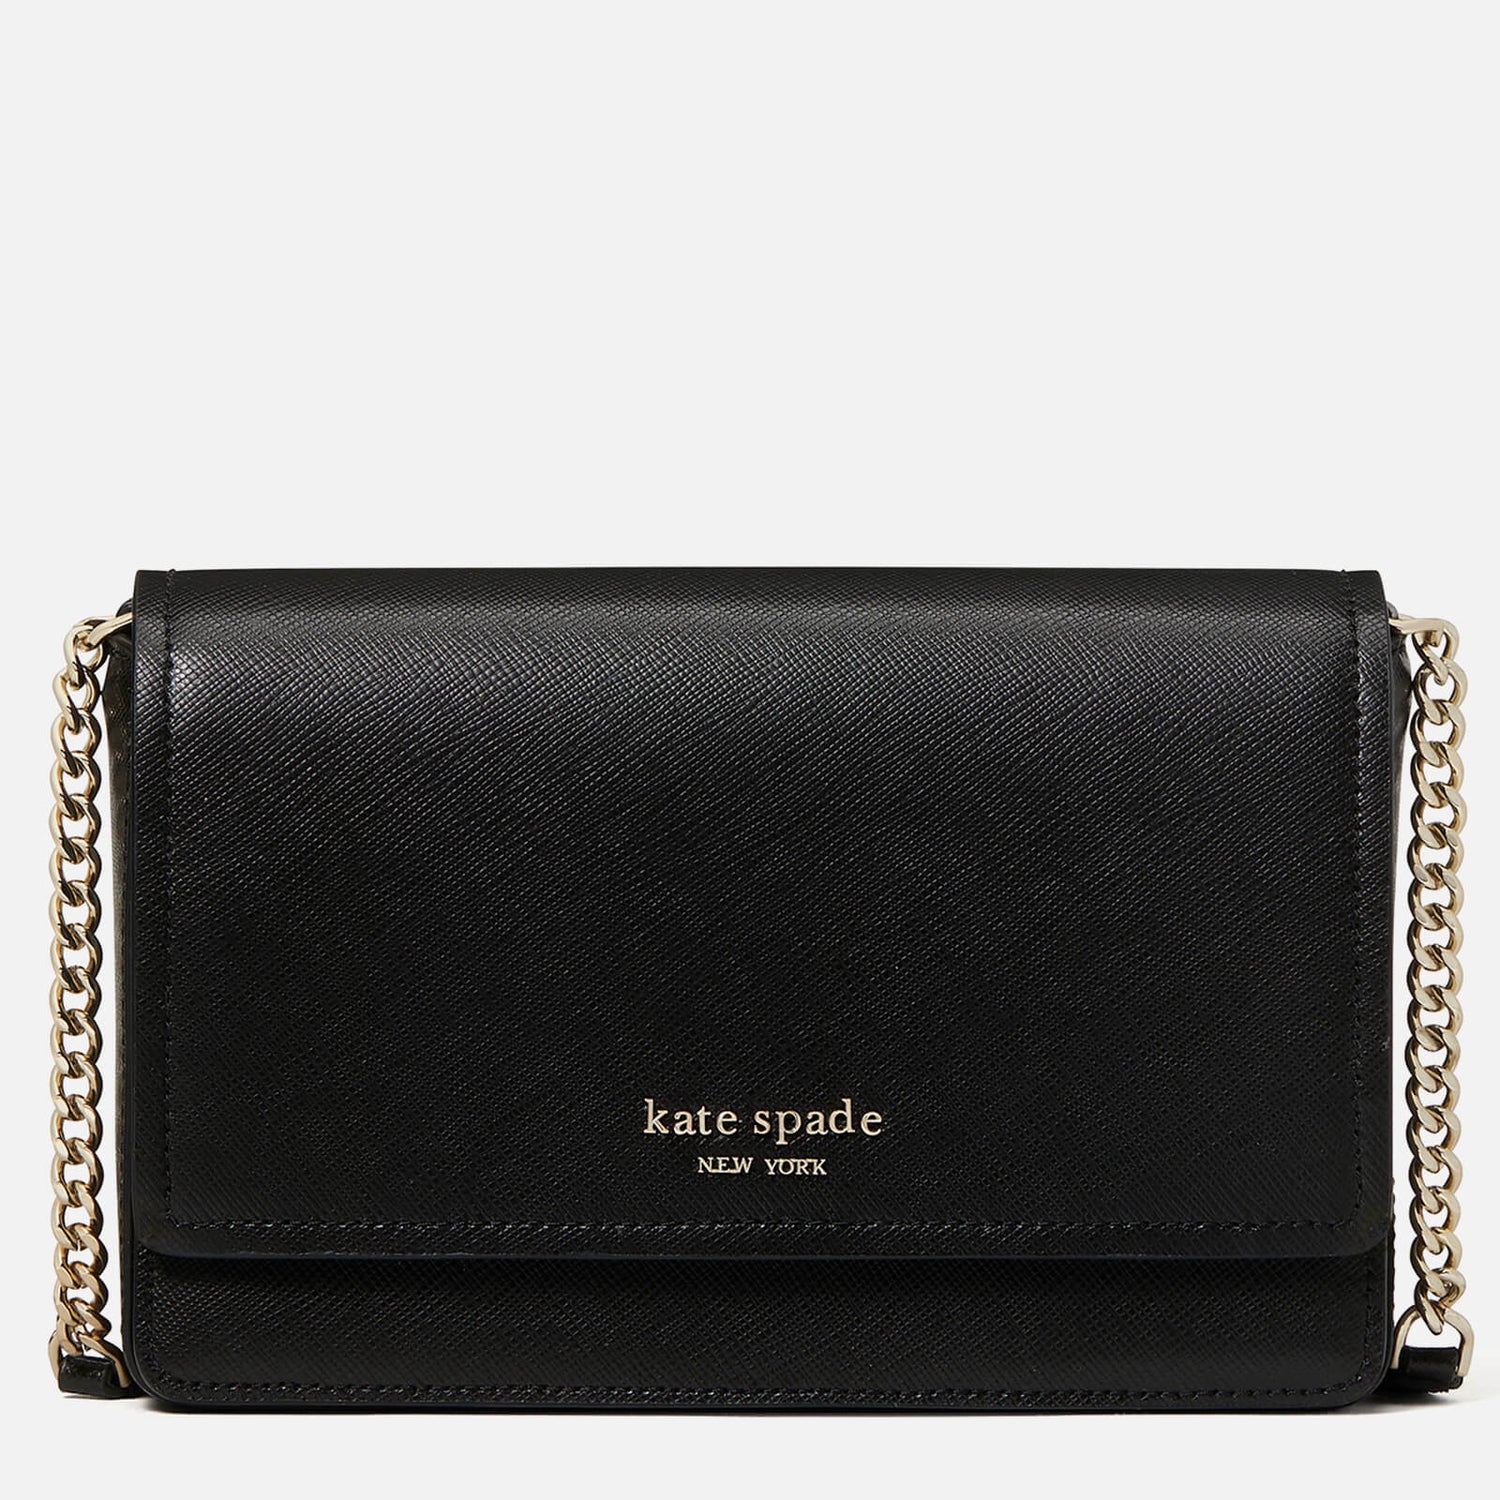 Kate Spade New York Women's Spencer Saffiano Chain Wallet - Black